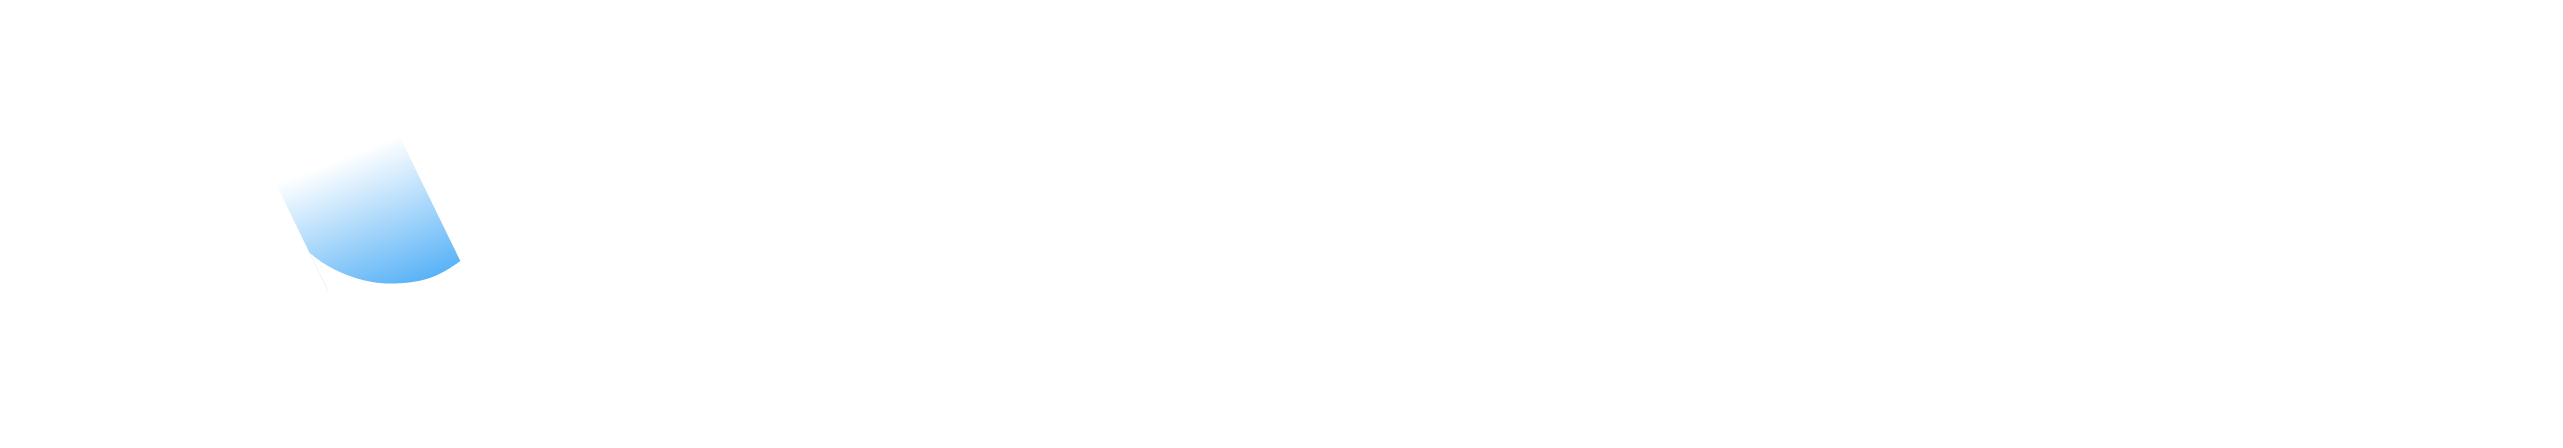 Workfine数据管理平台